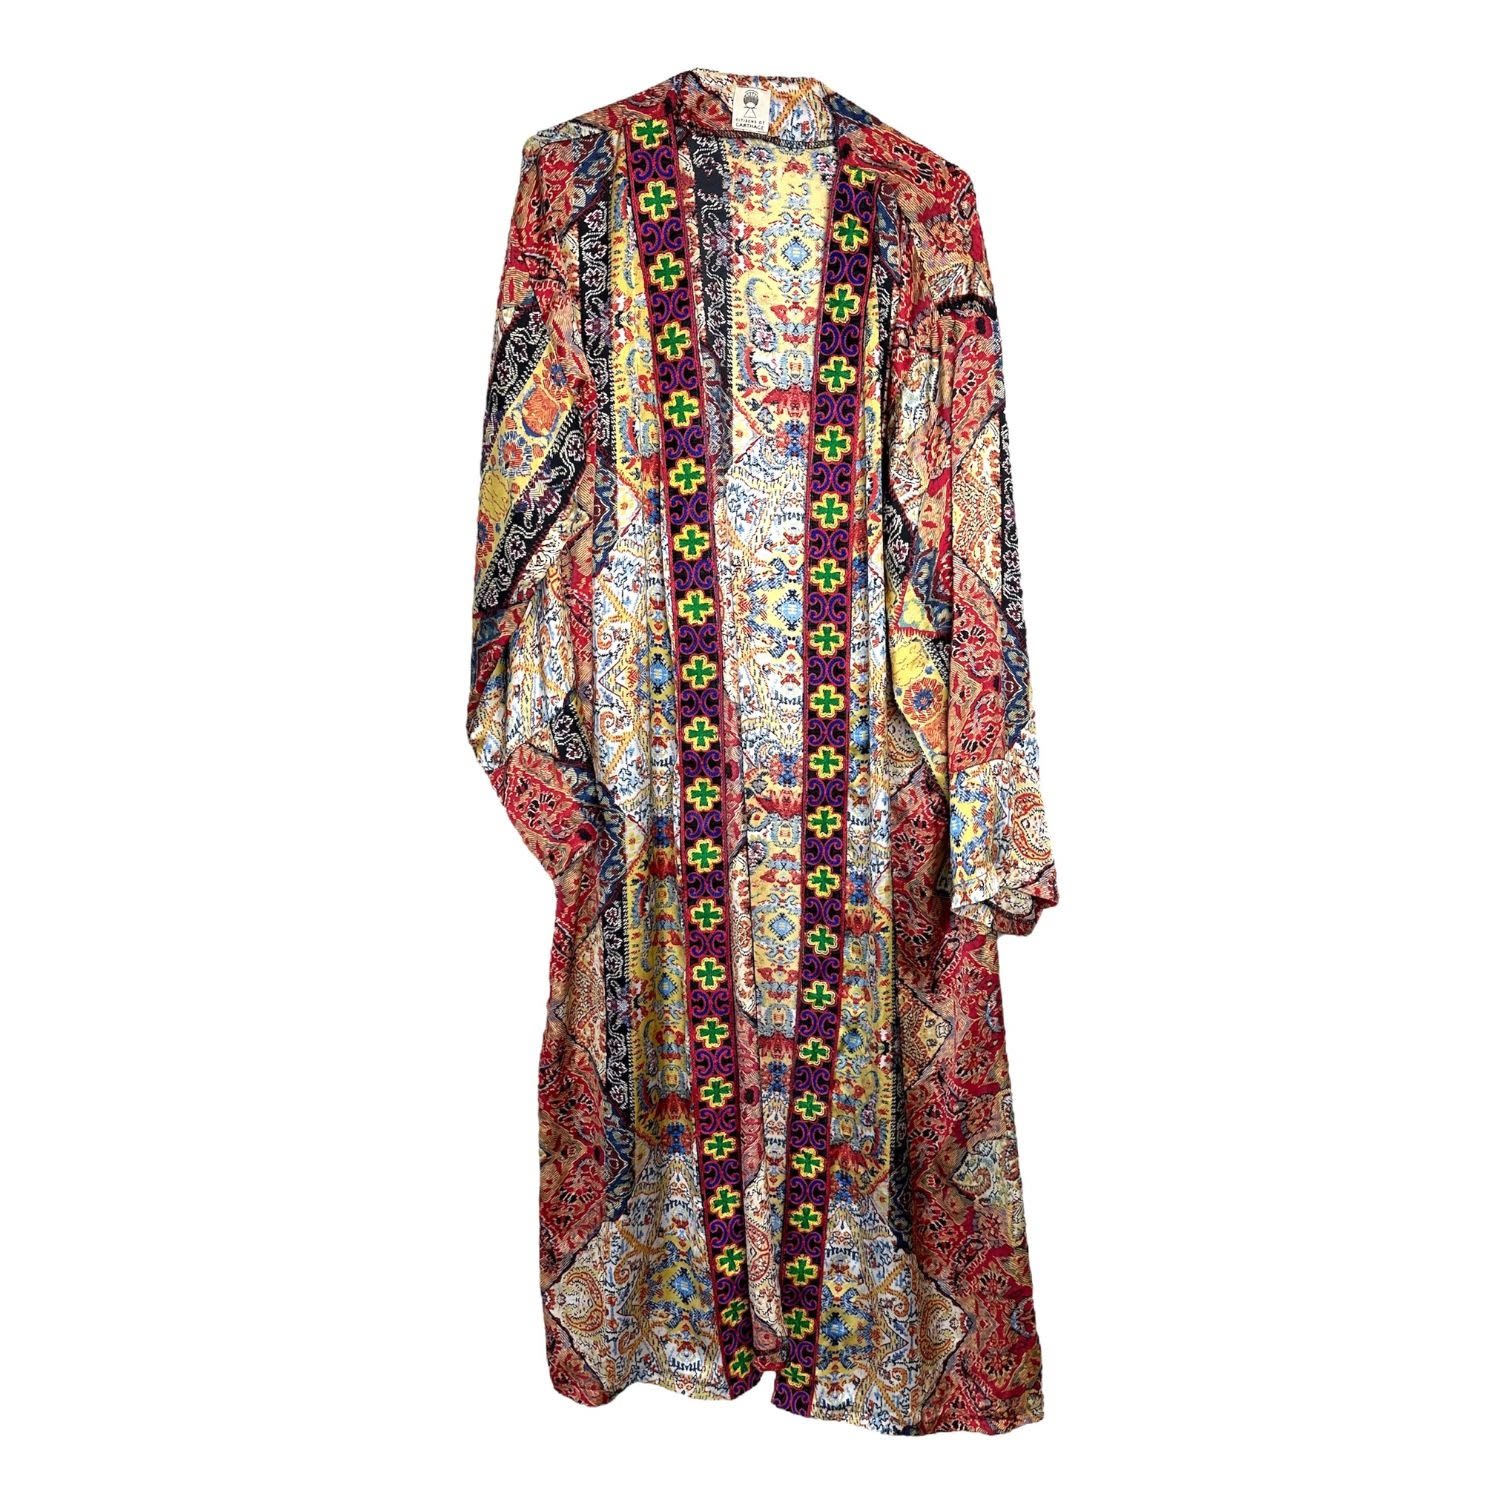 Women’s Red Porto Farina Long Kimono One Size Citizens of Carthage